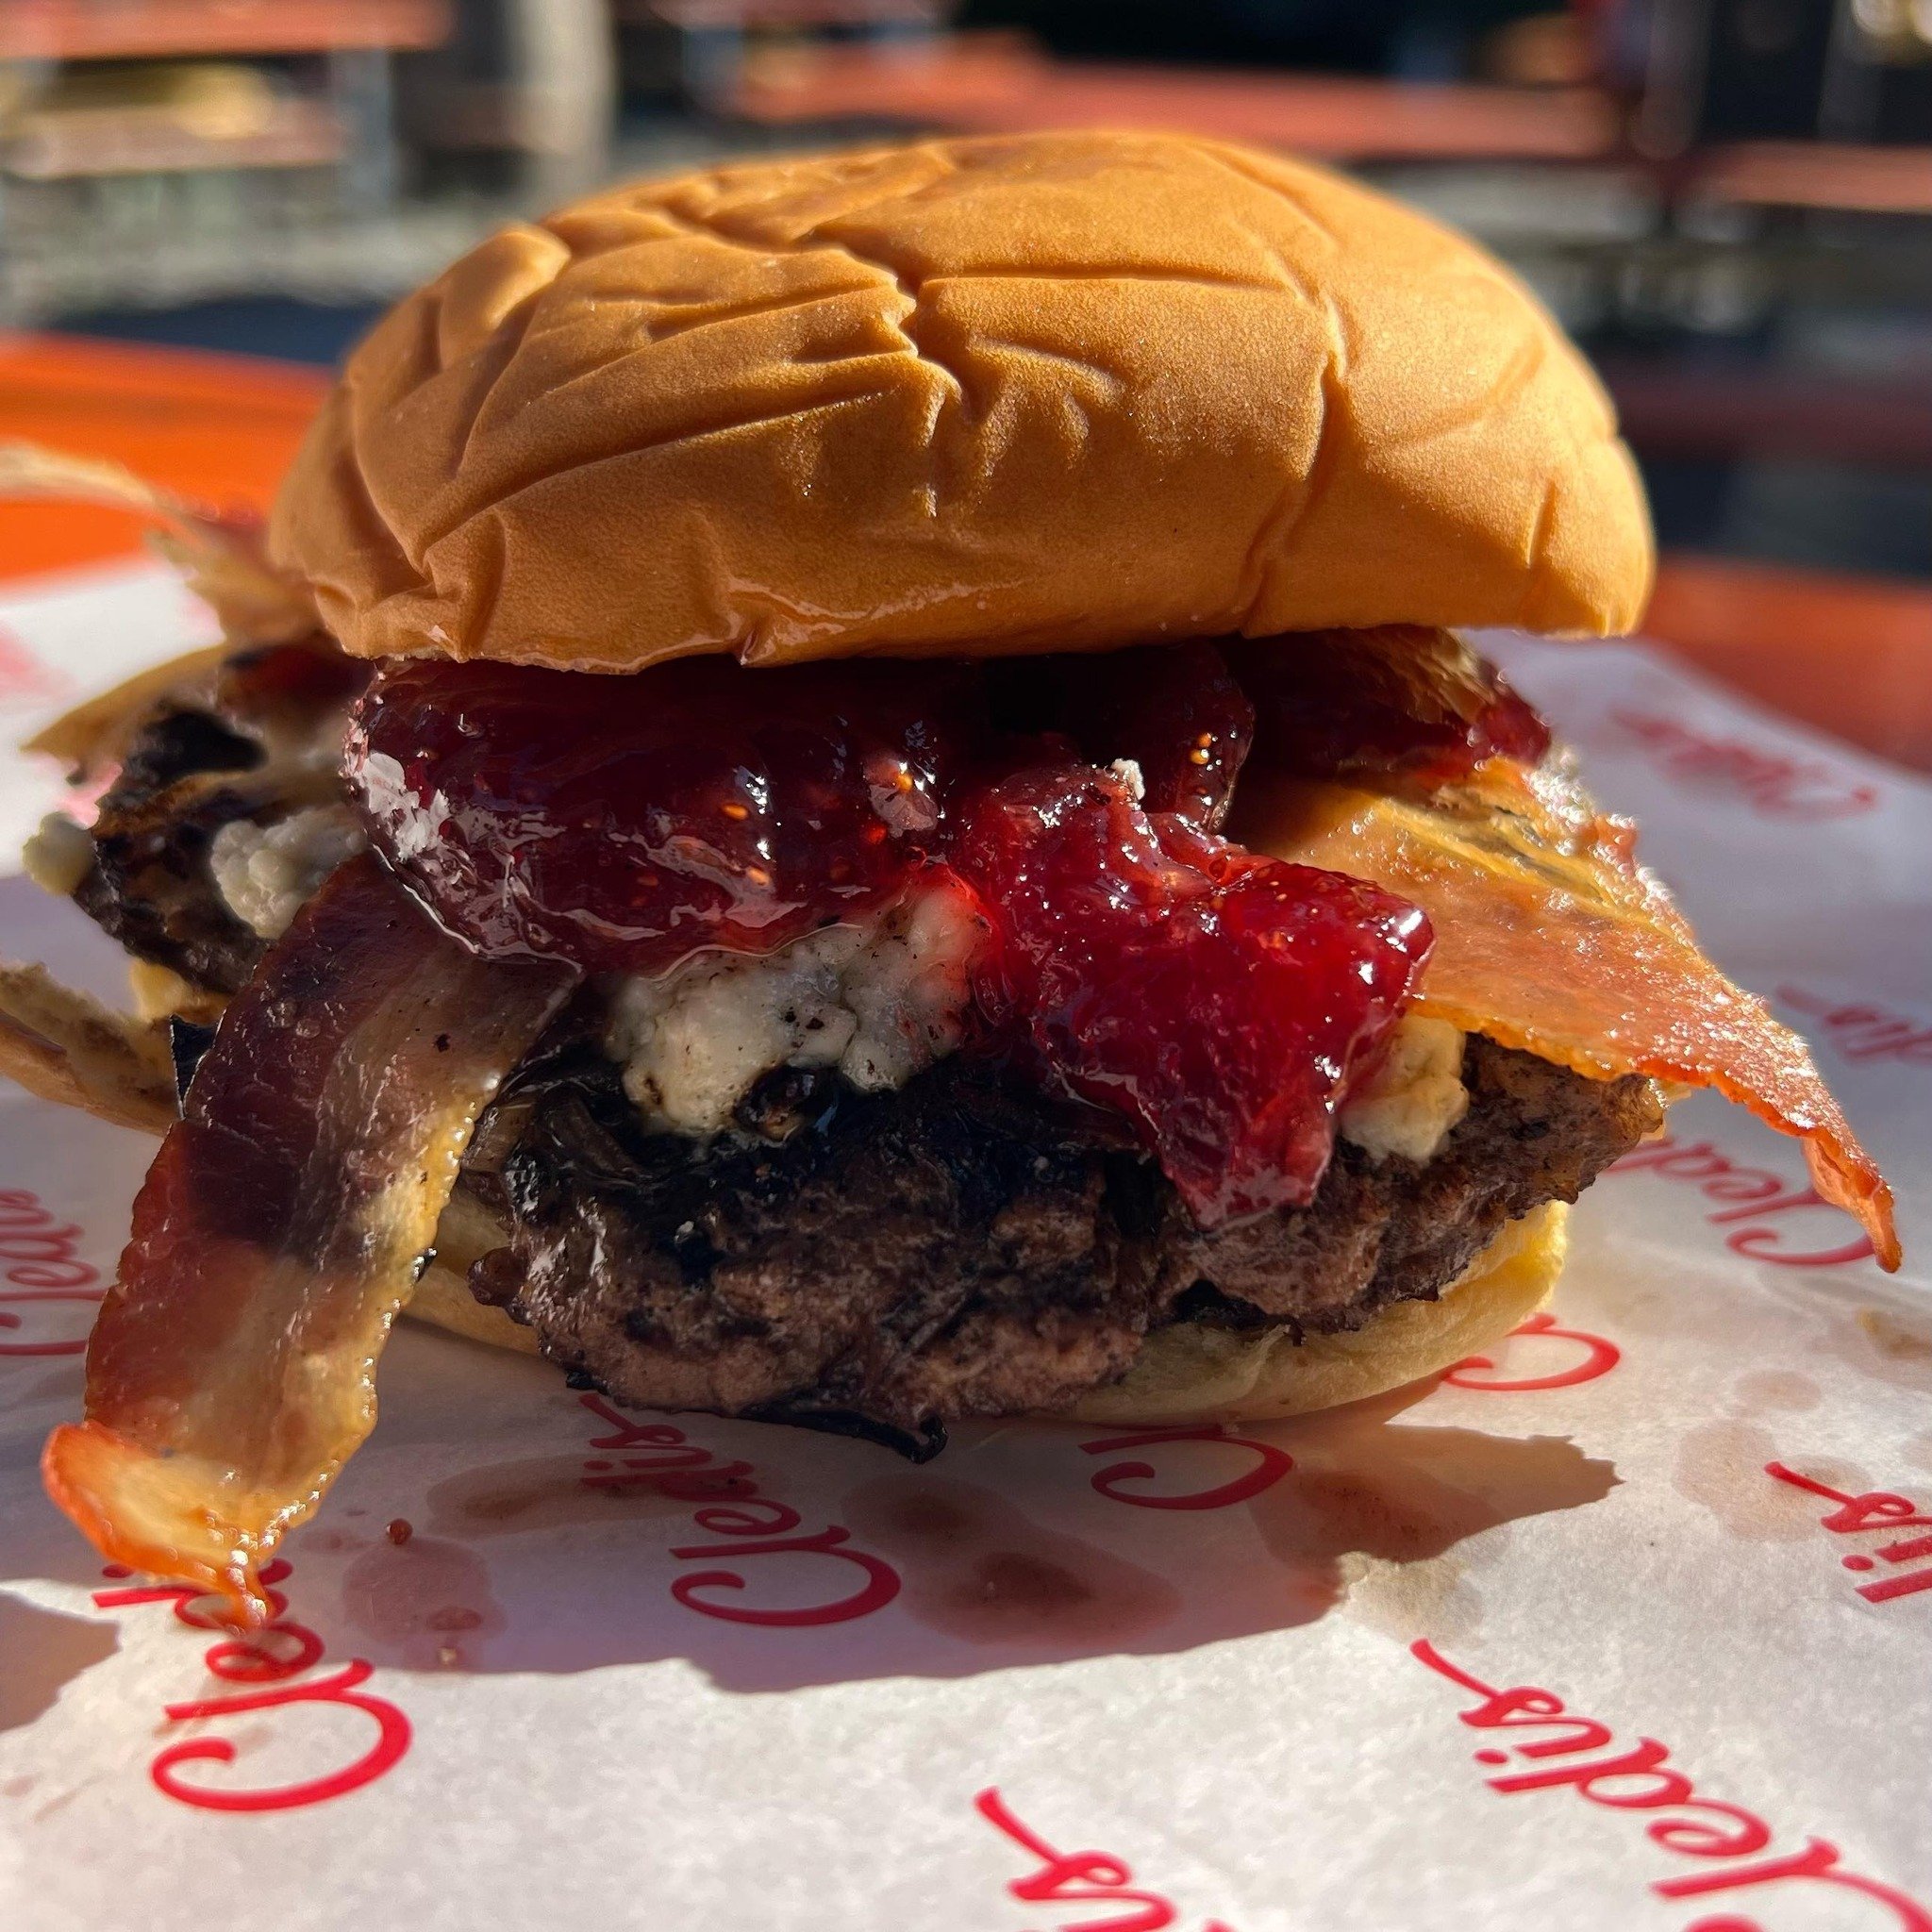 Bleu Berry Smash - grilled onion smash burger, bleu cheese crumbles, bacon, strawberry preserves 🍓🥓😘
.
.
.
.
.
#burgers #smashburger #burger #cheeseburger #nashville #nashvilleburger #nashvilleburgers #nashvillefood #nashvillefoodies #nashvilleeat